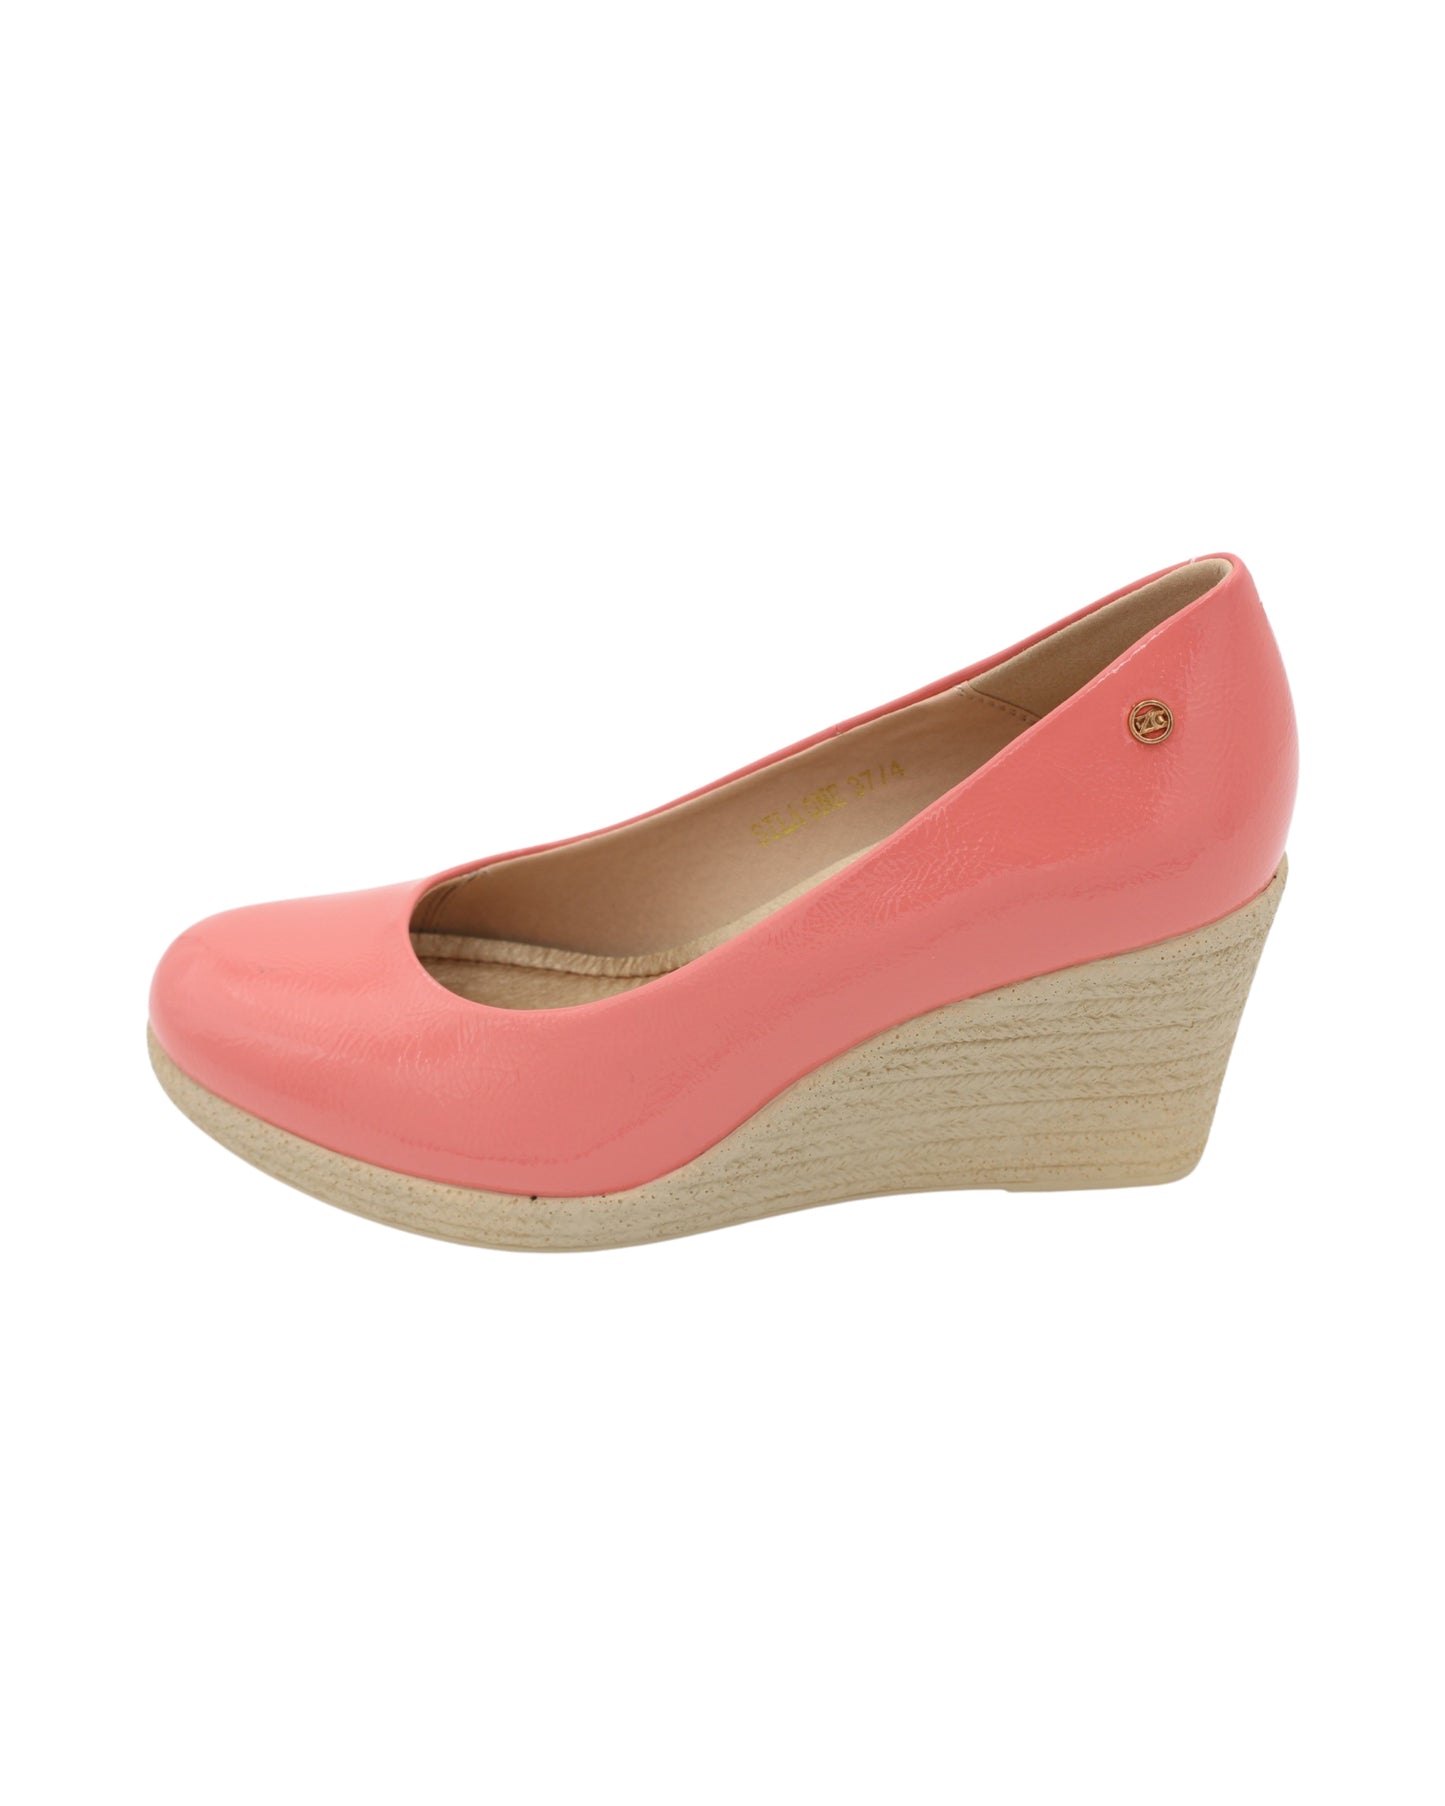 Zanni - Ladies Shoes Espadrilles Pink (2094)